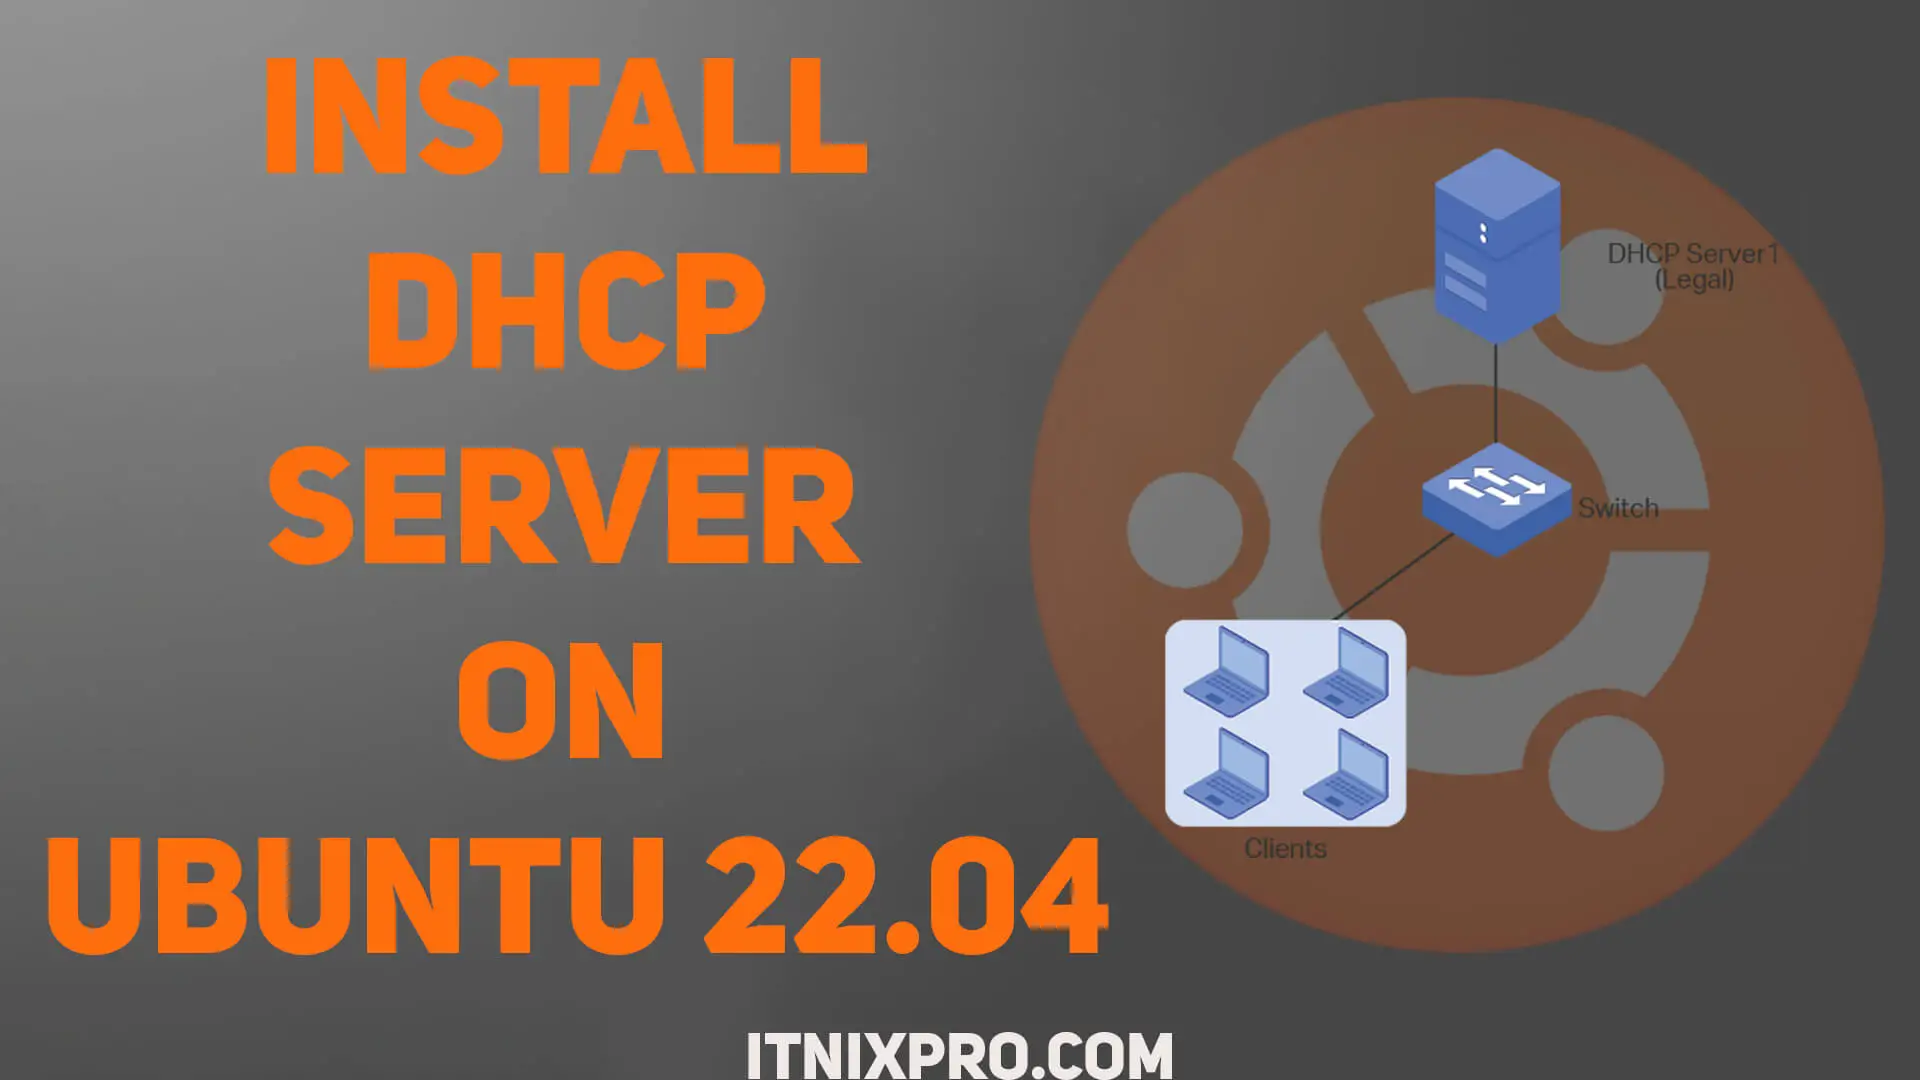 Install DHCP Server on Ubuntu 22.04